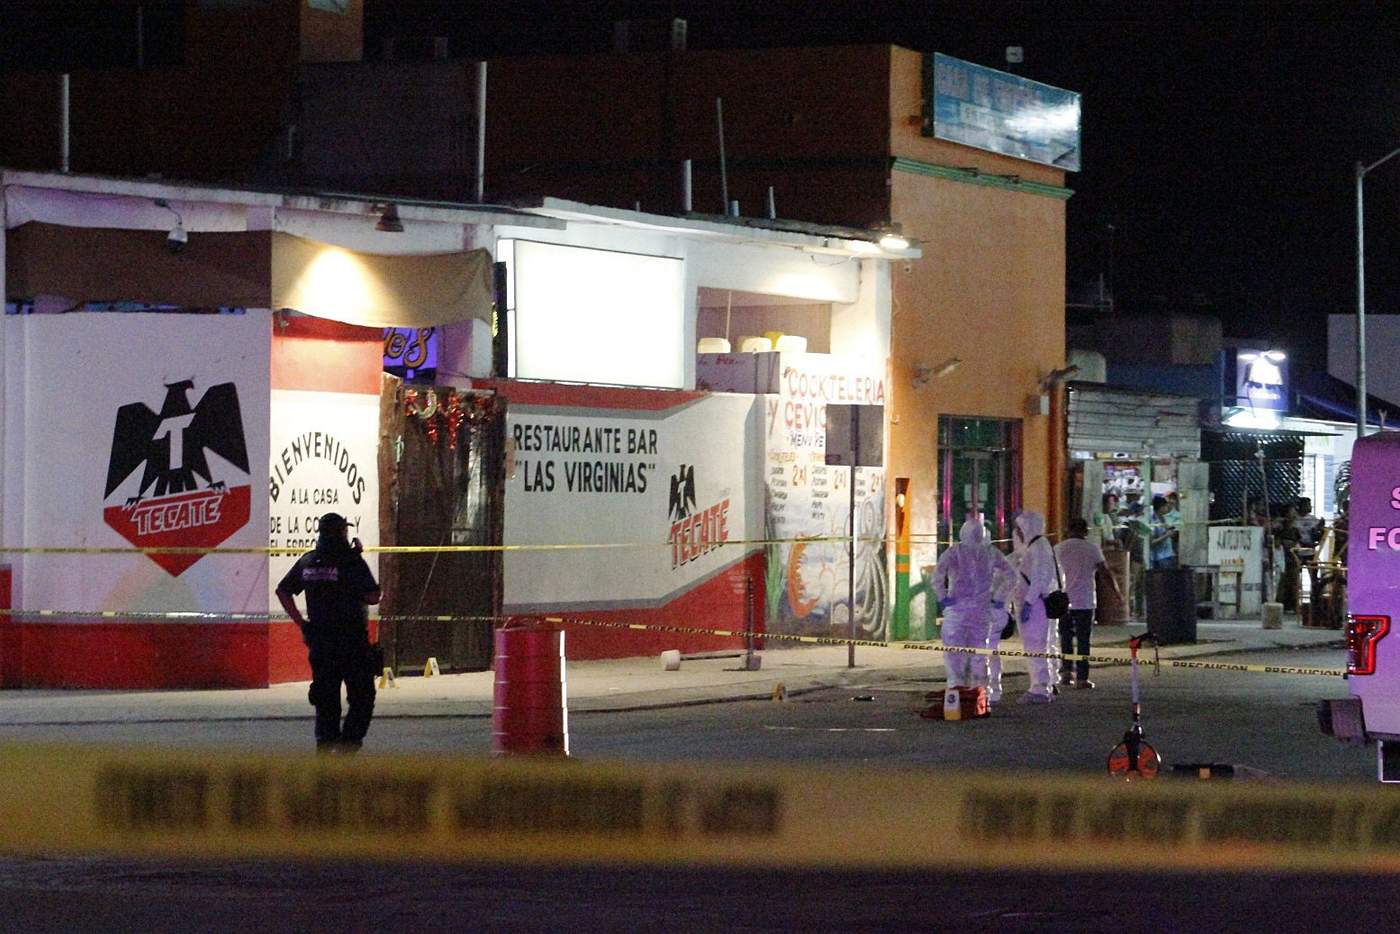 Ataque. Dos hombres entraron a atacar al bar Las Virginias. (EFE)